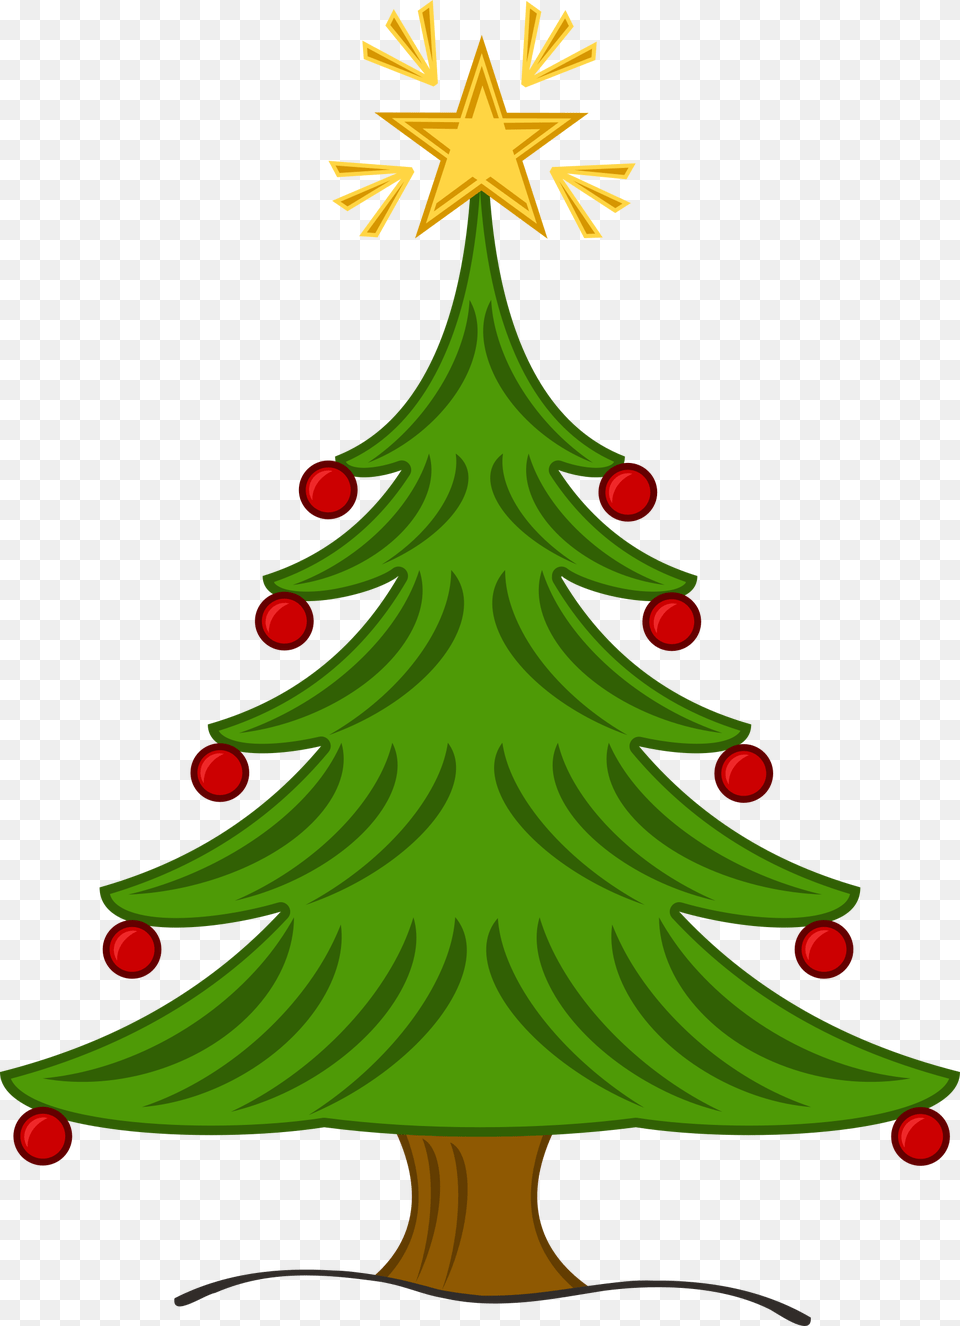 Clip Stock Grinch Vector Christmas Tree Clipart Christmas Tree, Plant, Christmas Decorations, Festival, Christmas Tree Png Image